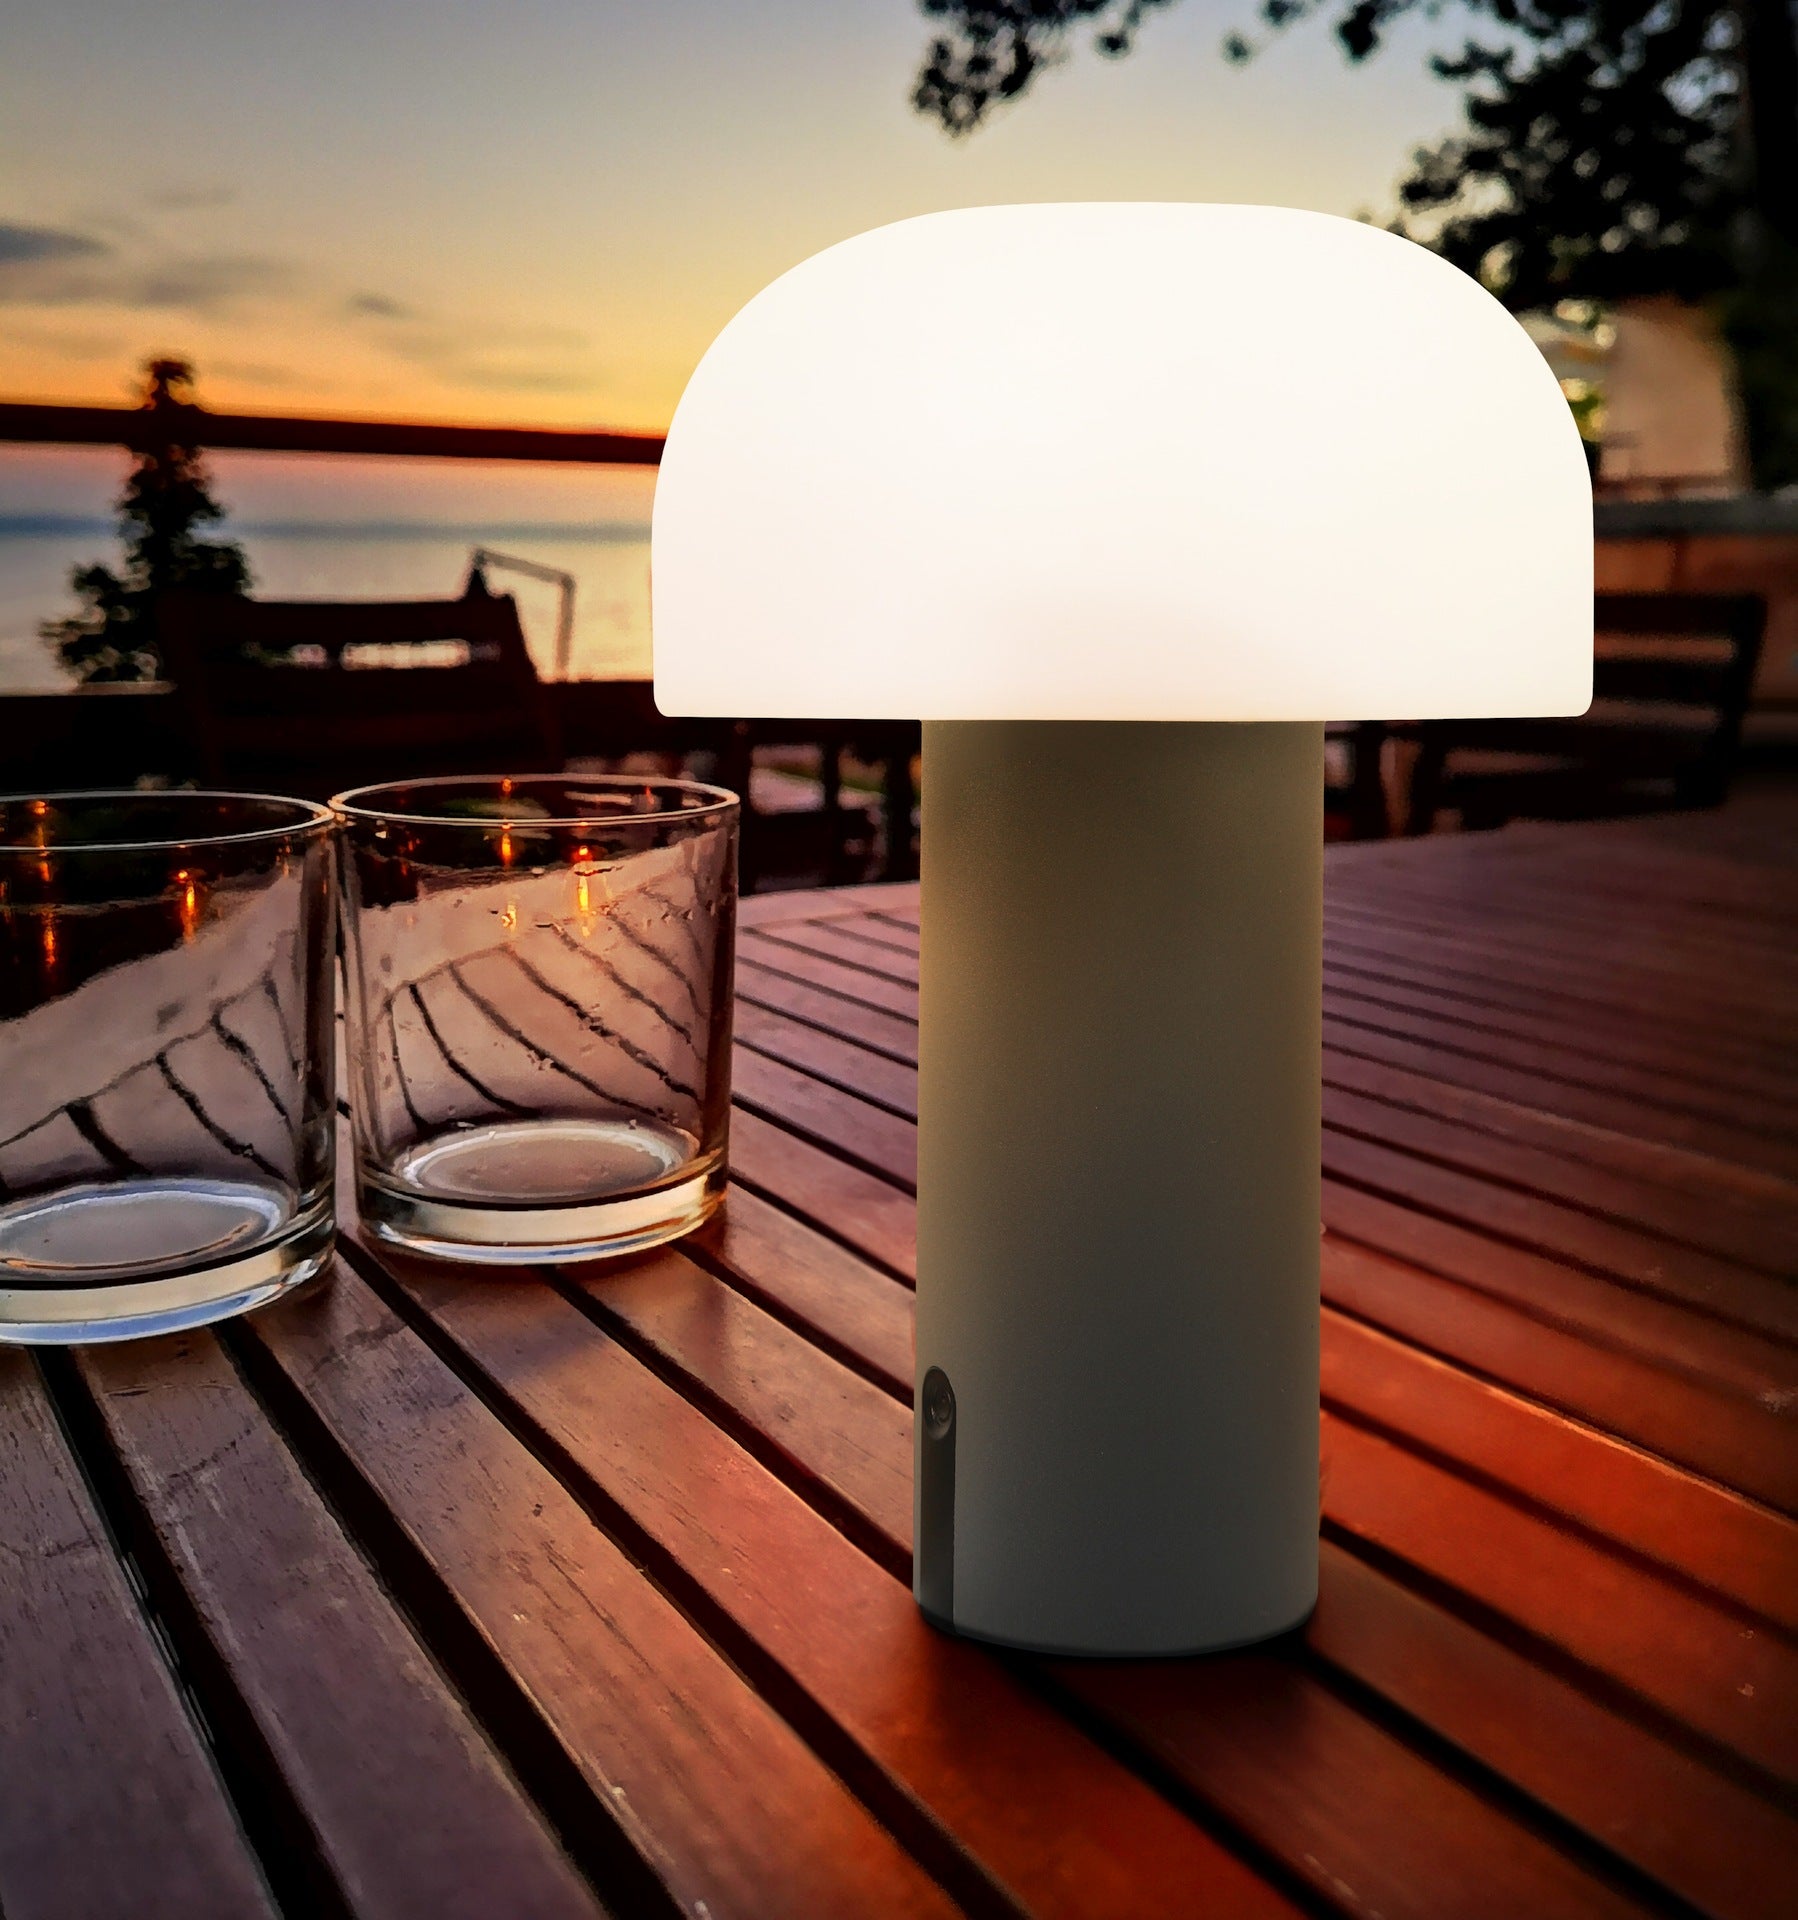 Shine-22 table lamp